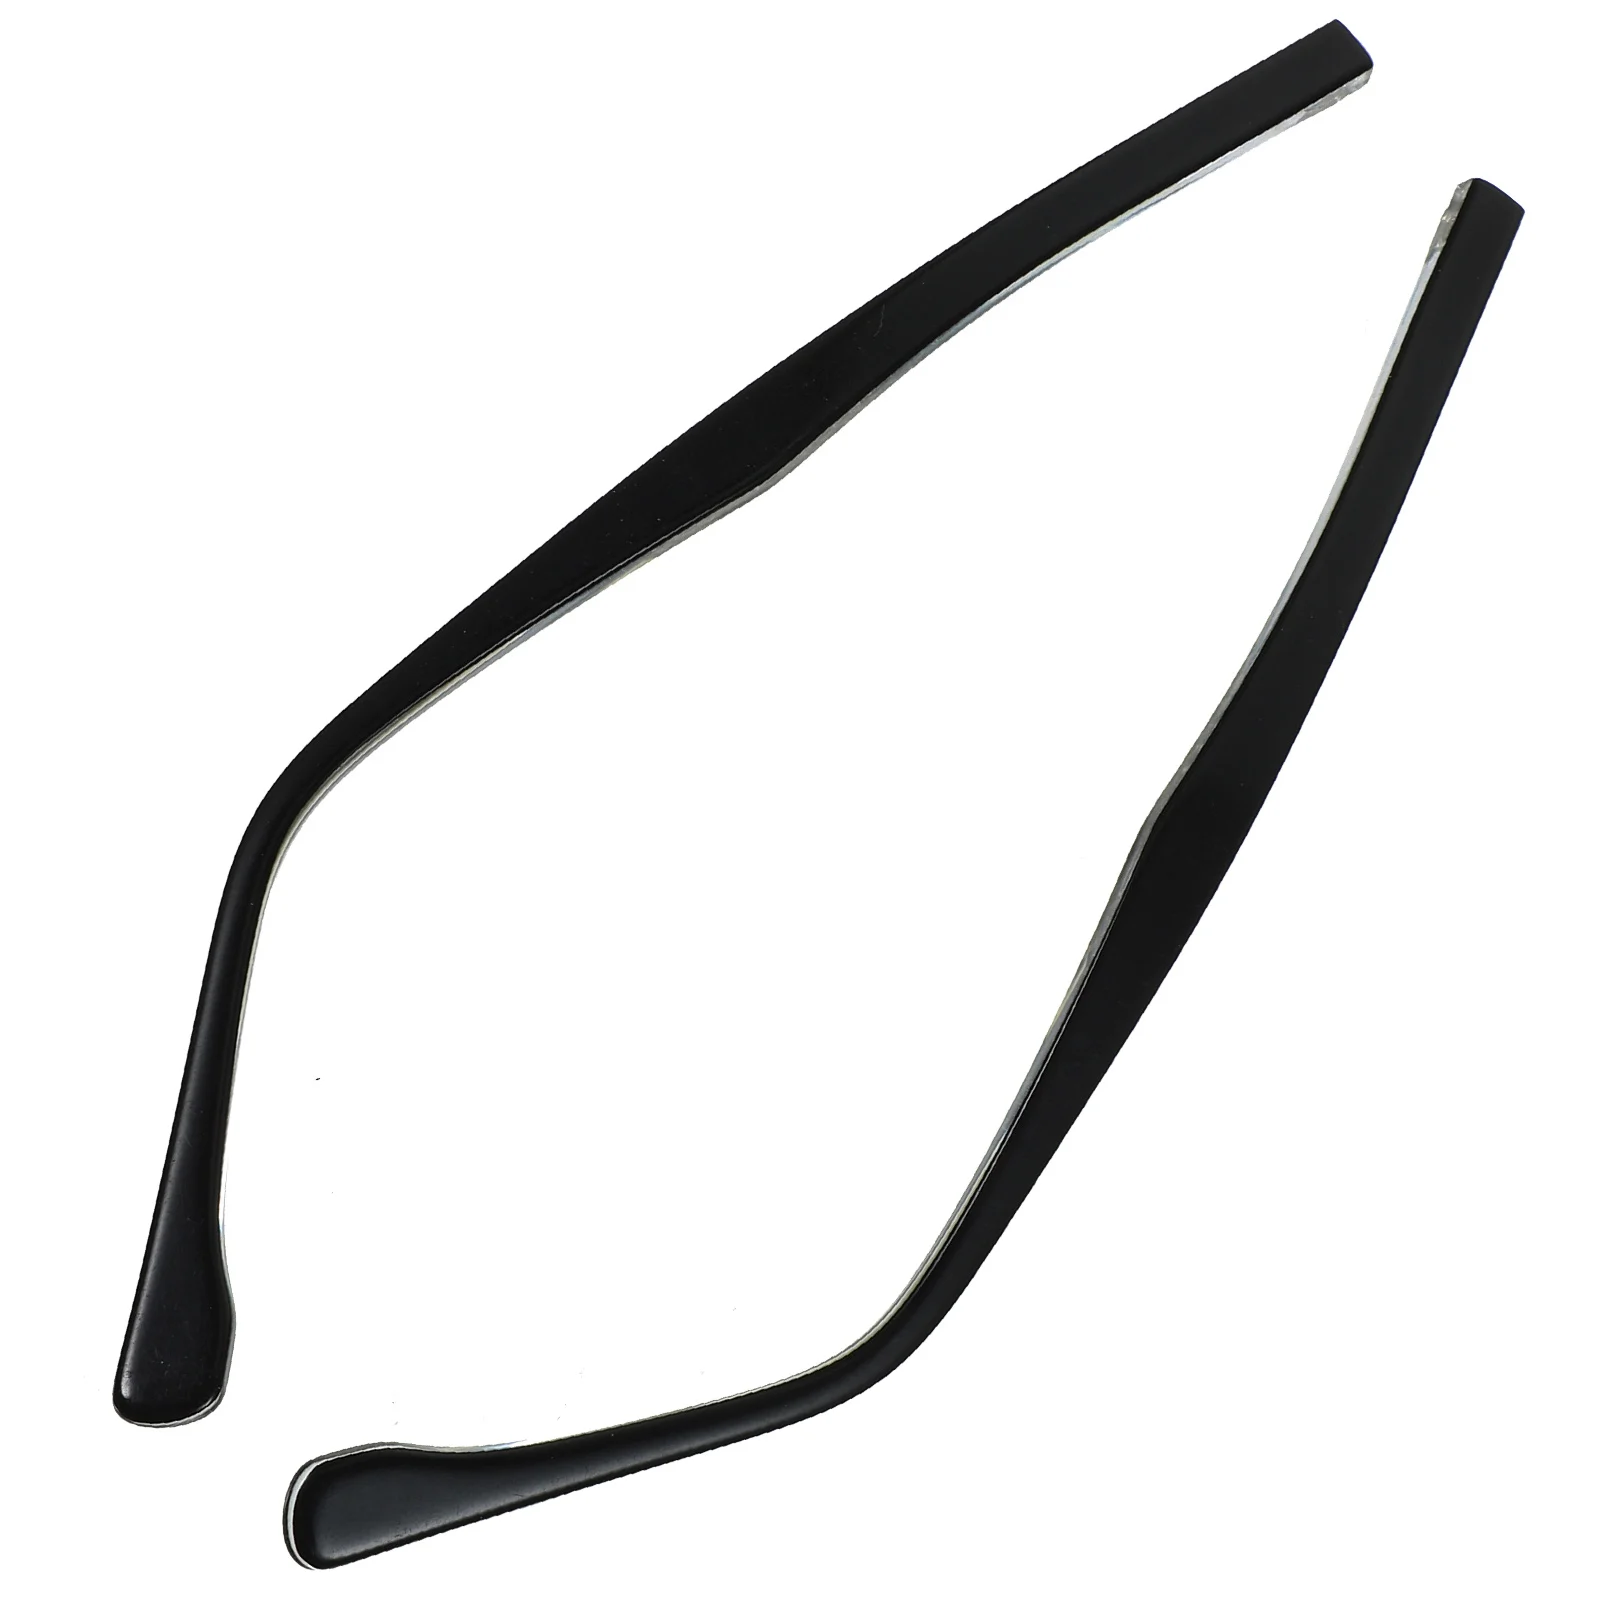 

Glasses Accessories Metallic Sunglasses Arms Frames Universal Replacement Temple Parts Legs Eyeglasses